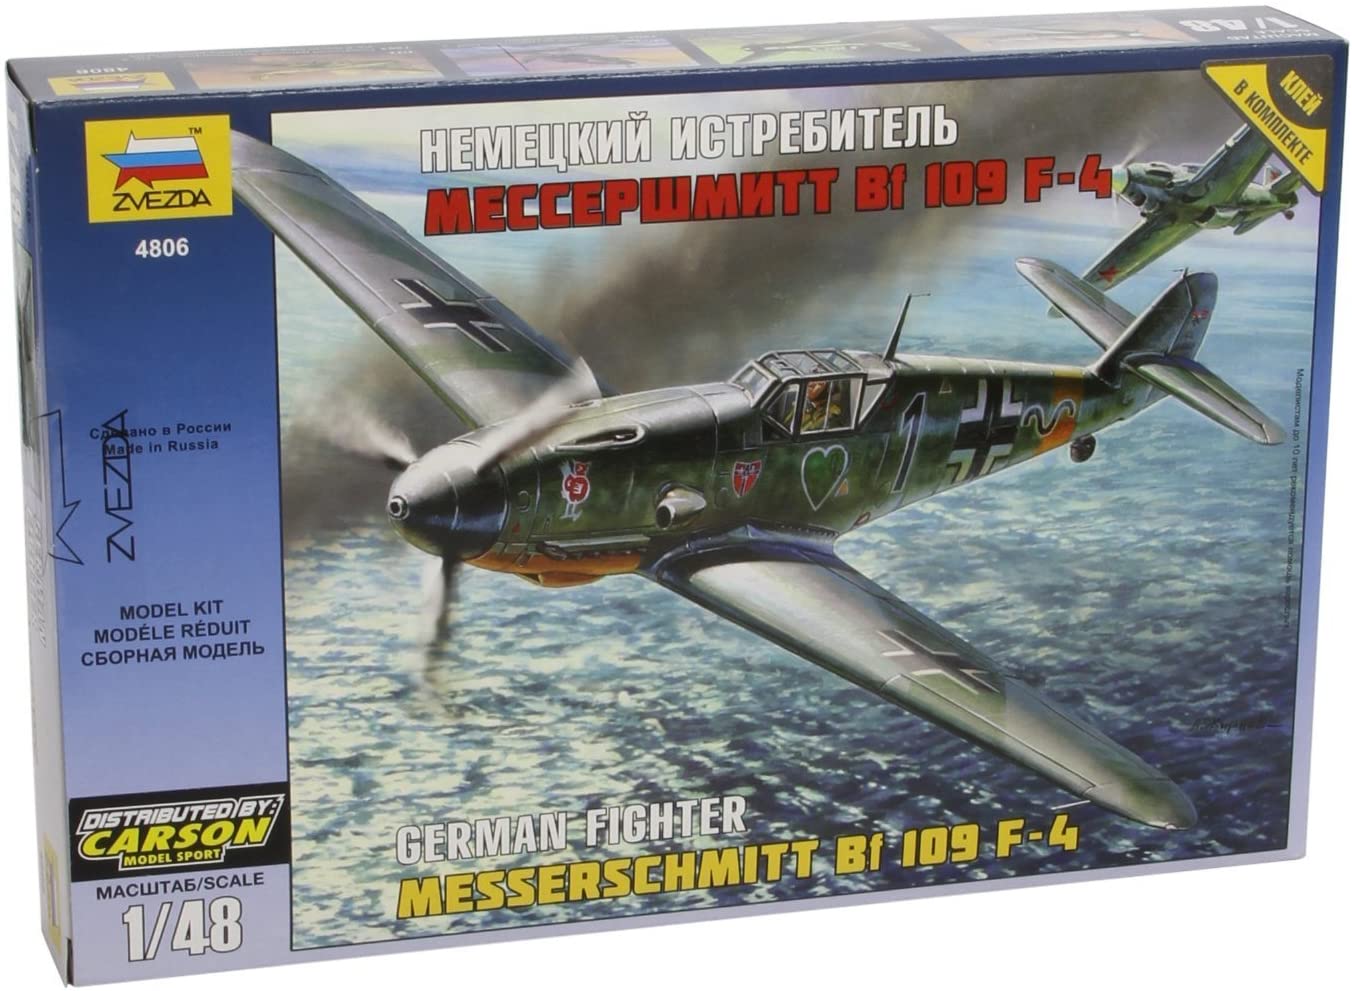 Zvezda Models Messerschmitt Bf-109 F4 Model Building Kit, Scale 1/48 [並行輸入品]